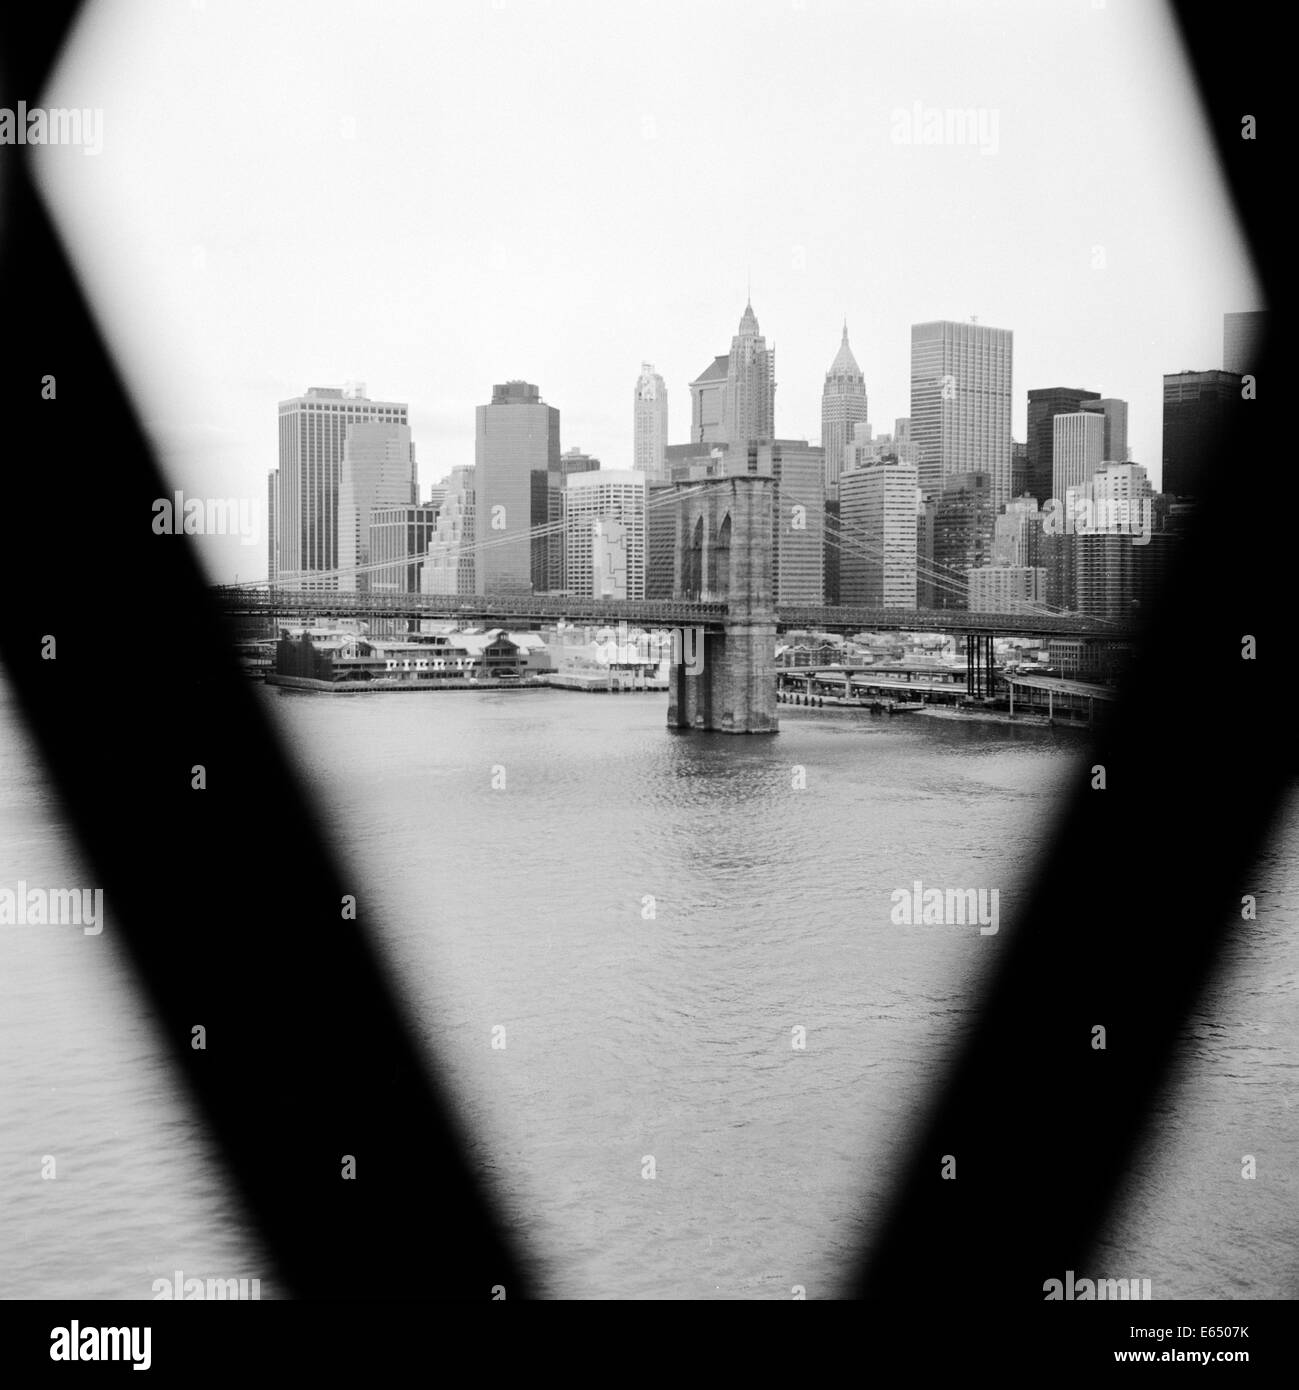 Brooklyn bridge and Lower Manhattan taken from Manhattan bridge on medium format film Stock Photo